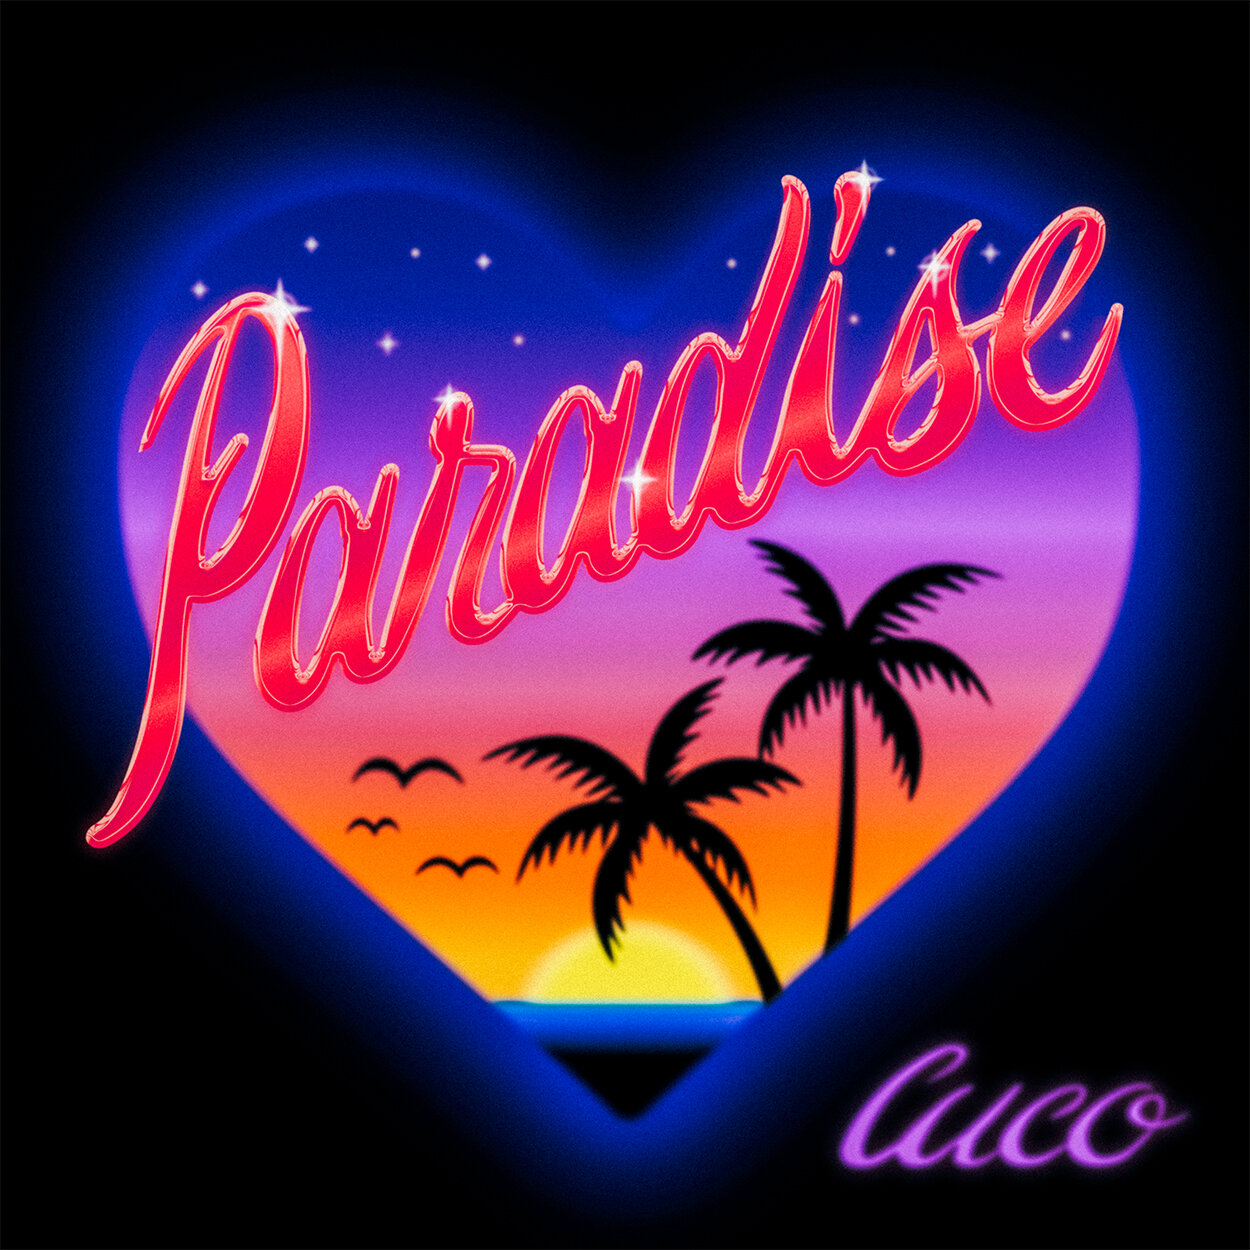 Cuco - "Paradise"